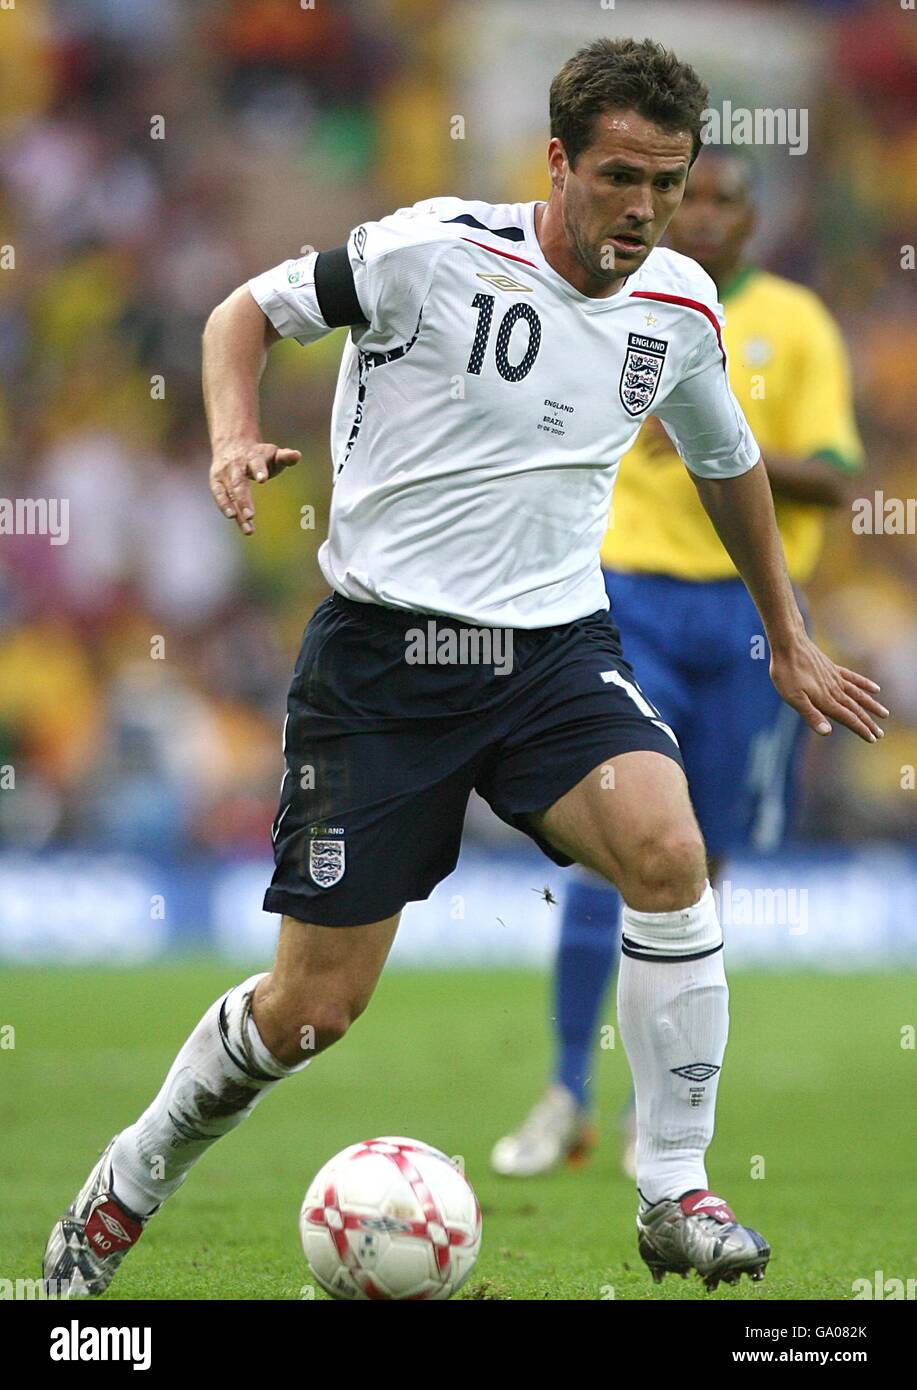 Calcio - International friendly - Inghilterra v Brasile - Stadio di Wembley. Michael Owen, Inghilterra Foto Stock